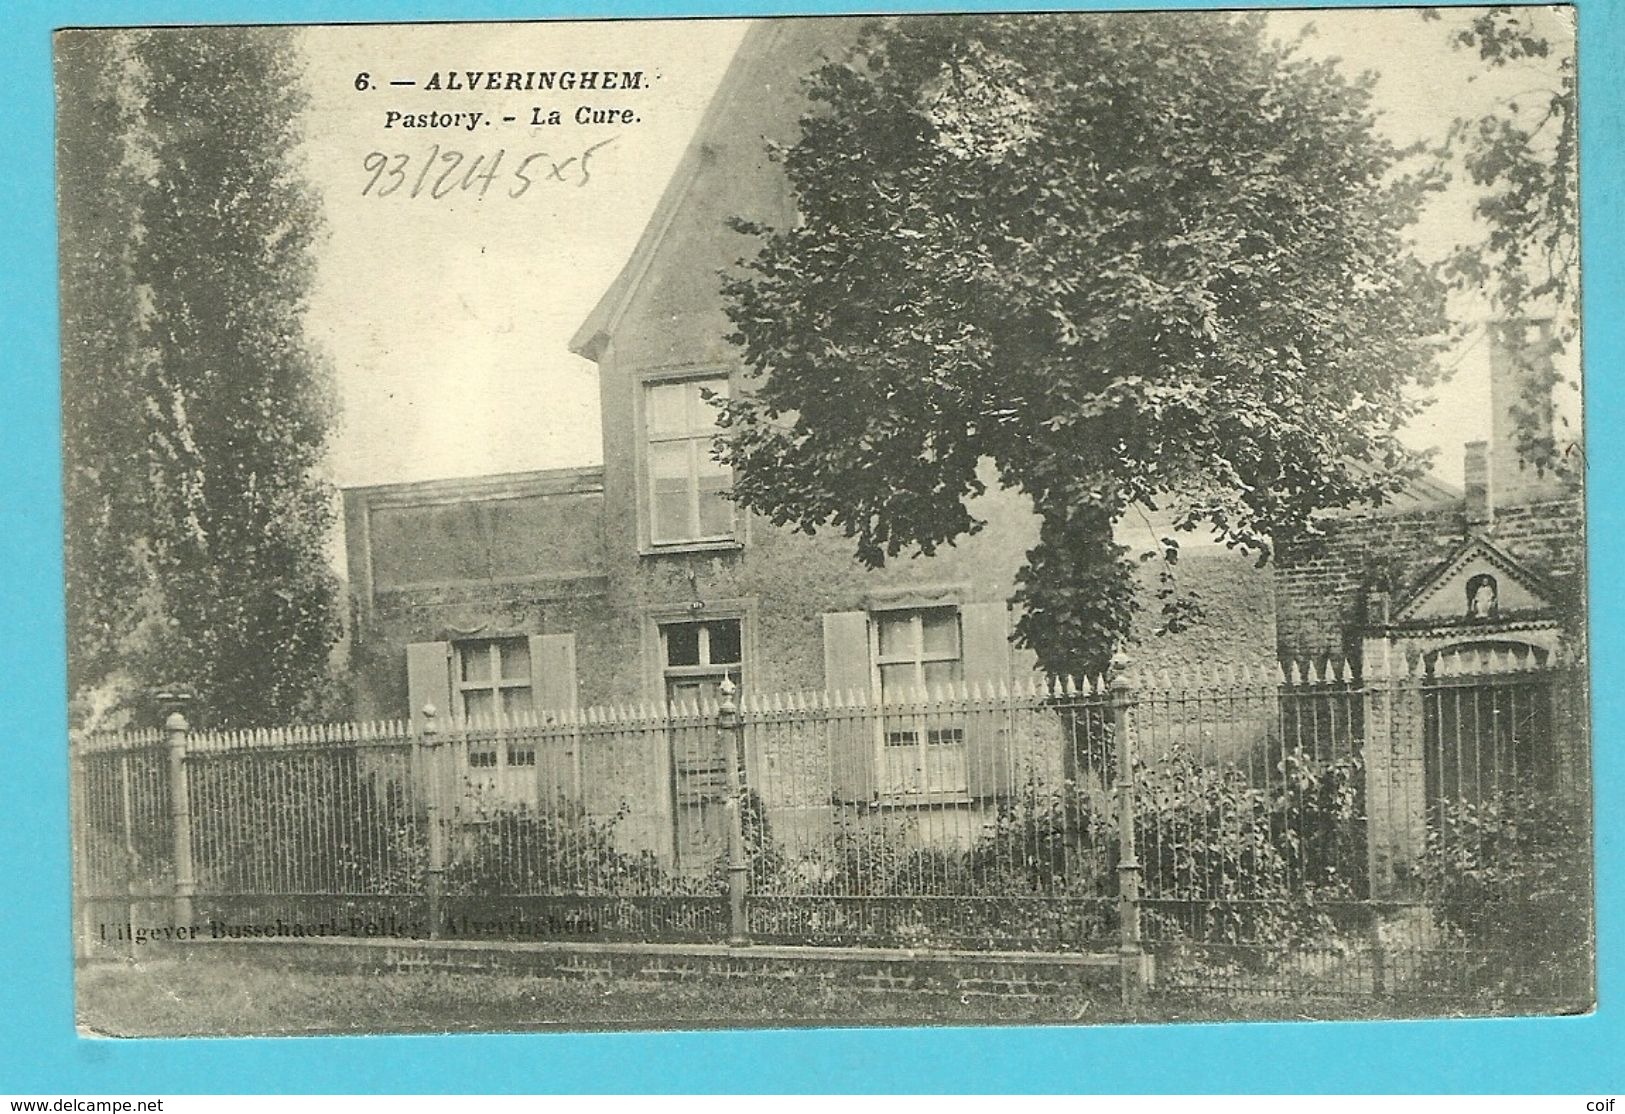 Kaart (Alveringhem) Met Stempel VEURNE / FURNES Op 22/11/1914 - Not Occupied Zone